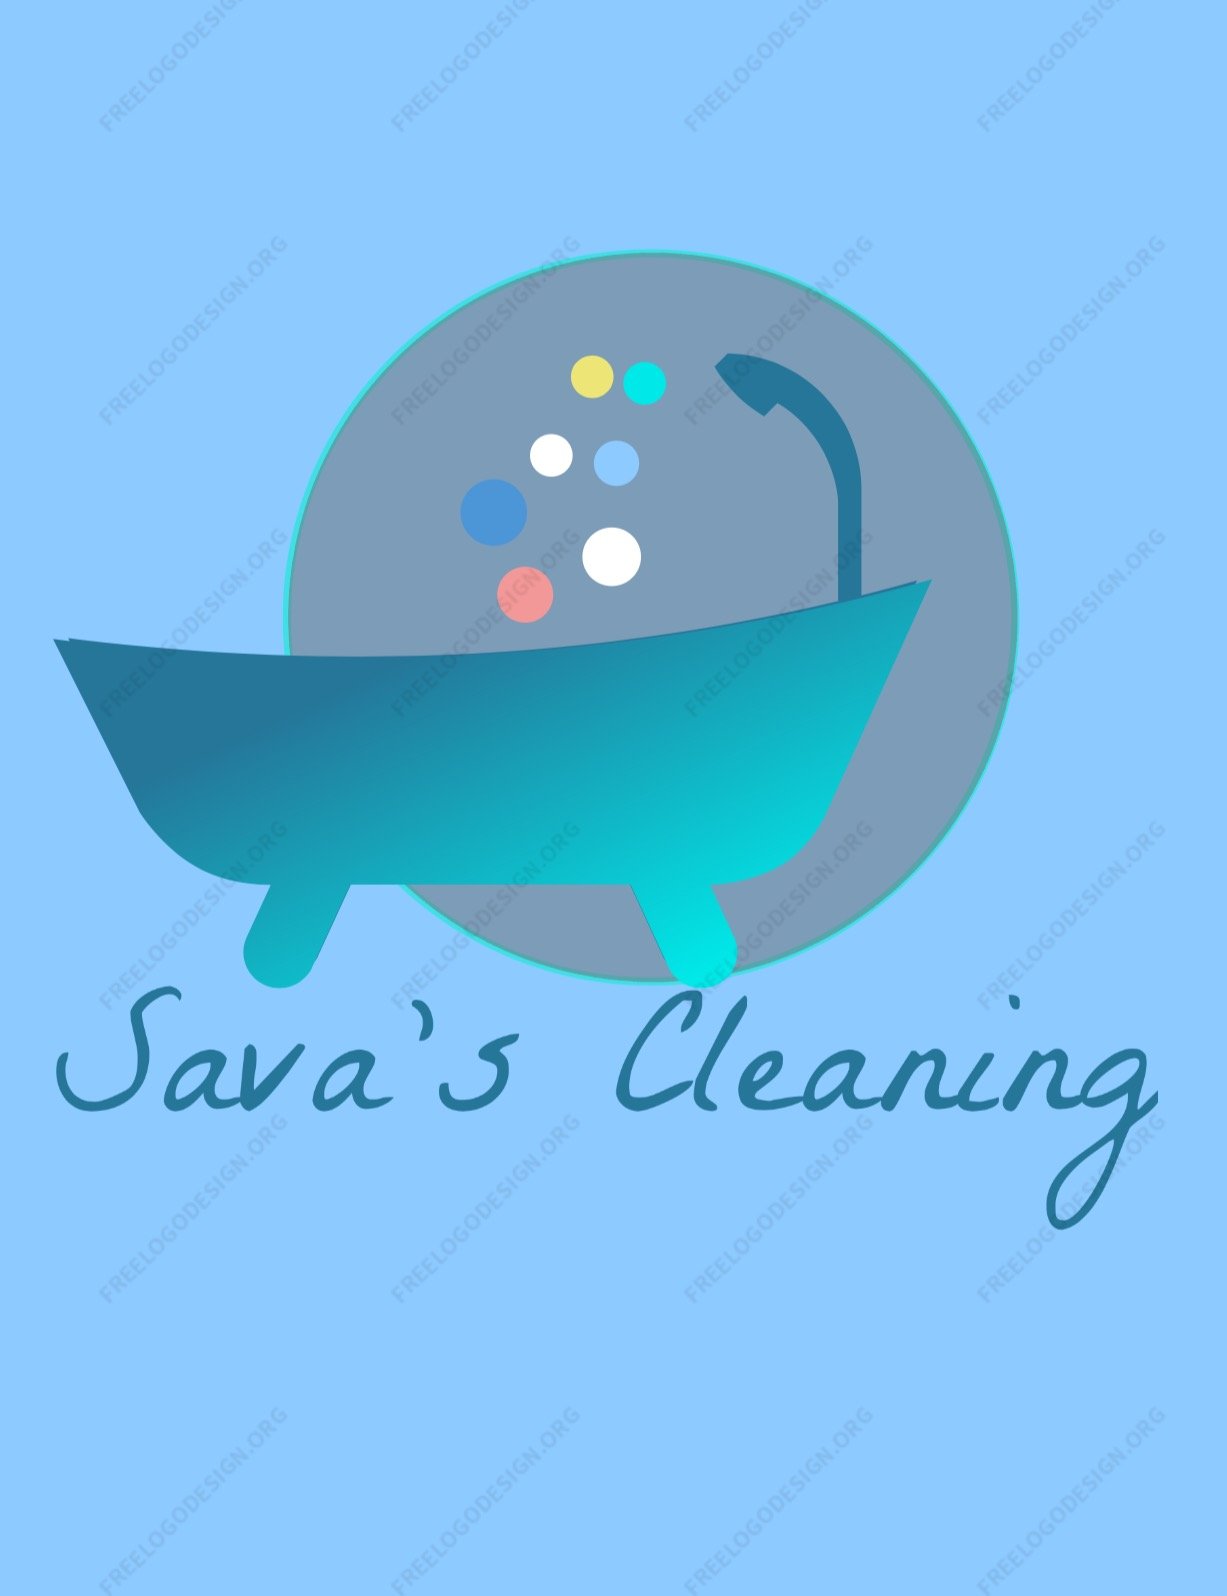 Sava's Cleaning Logo